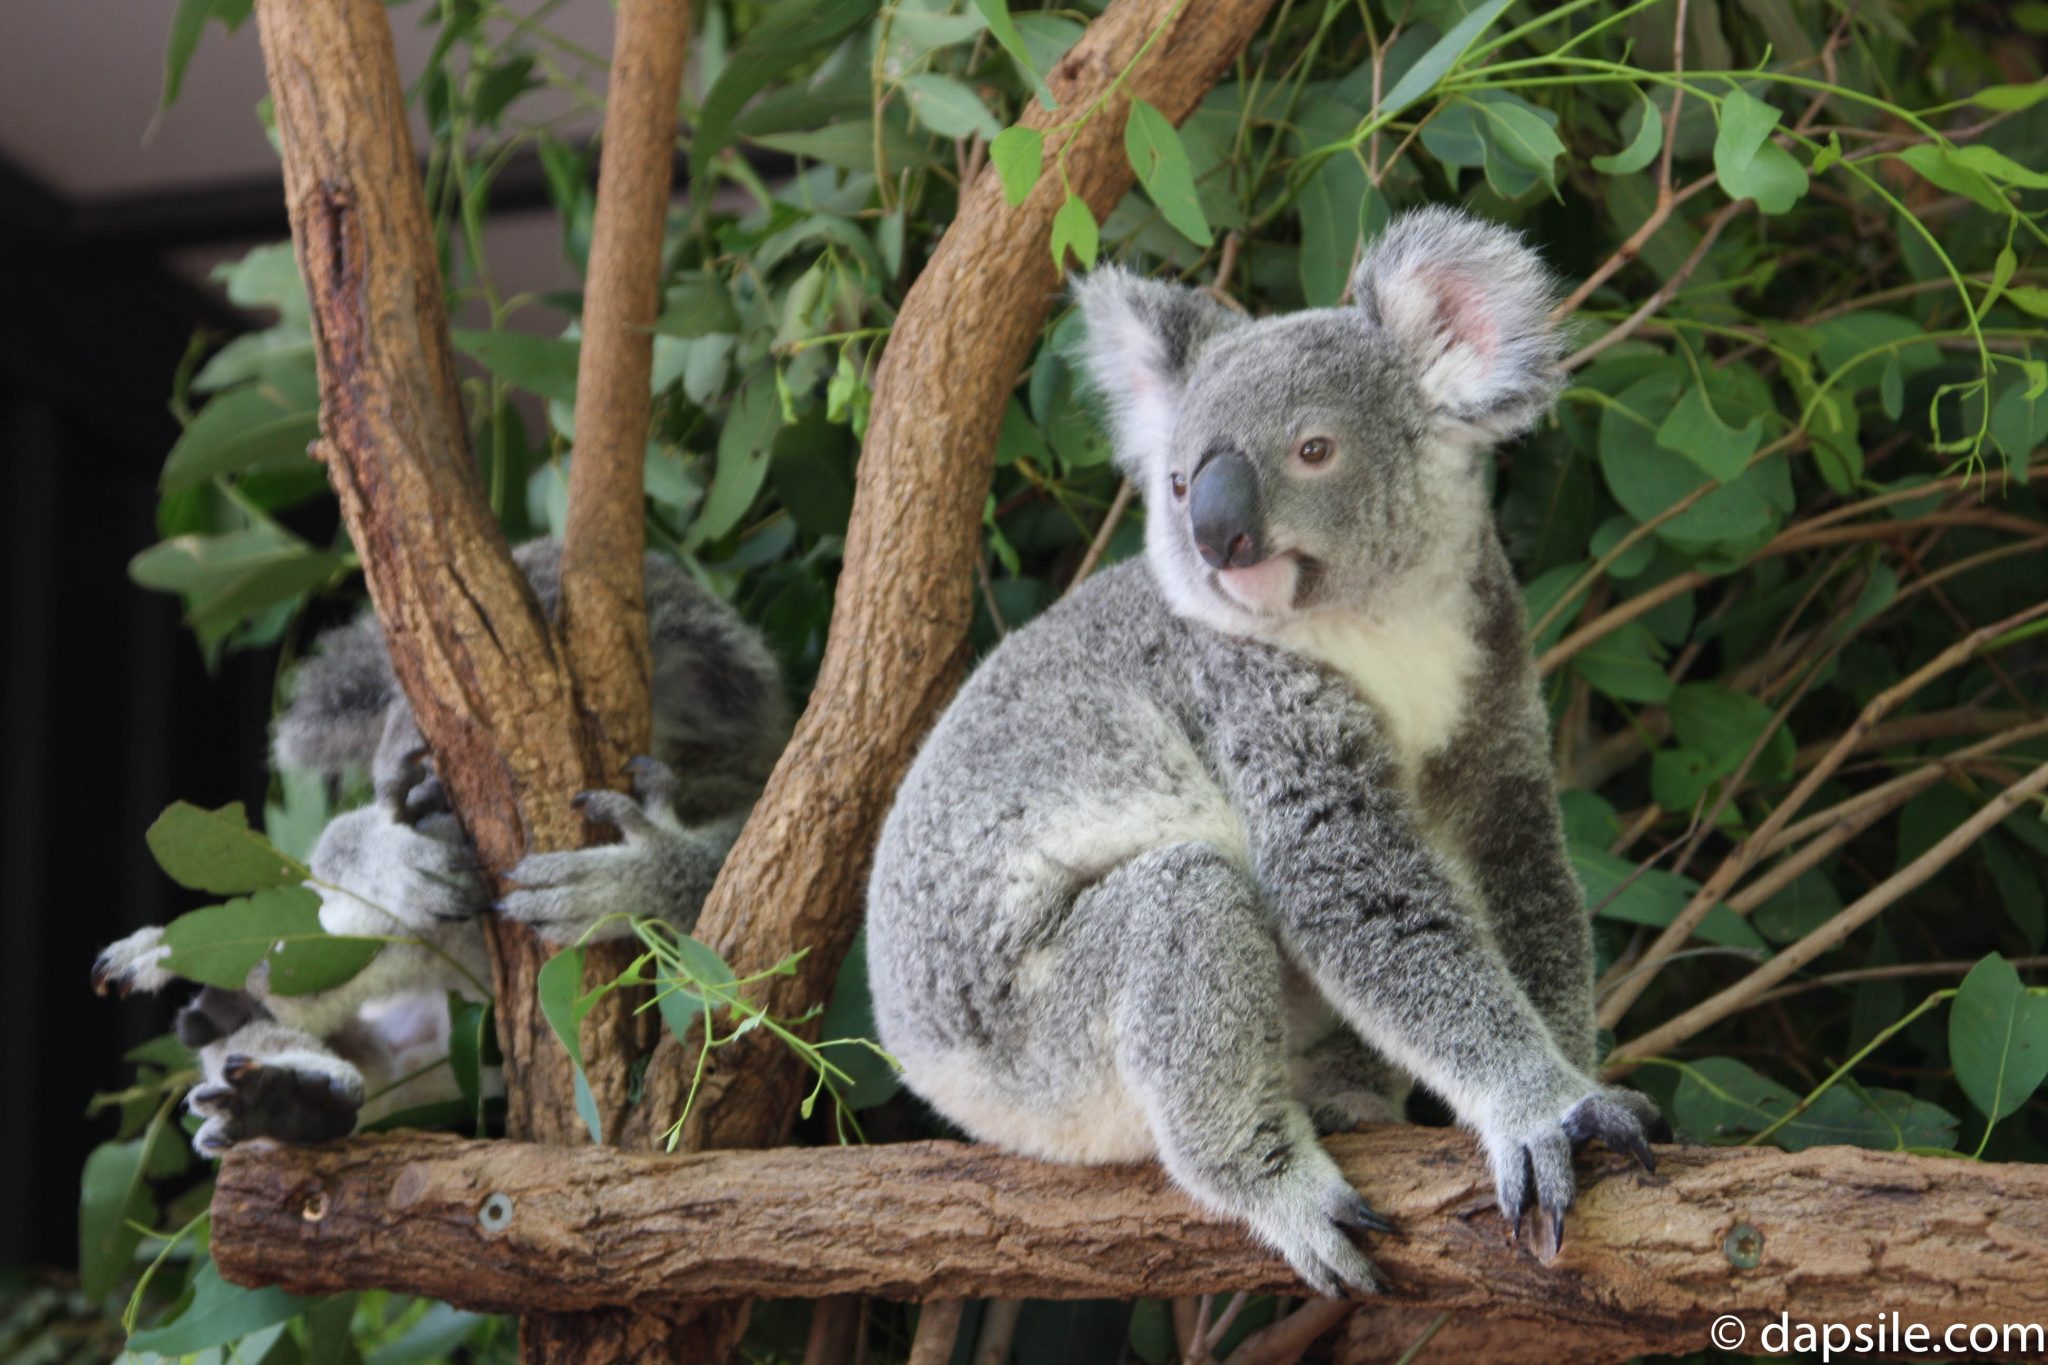 Lone Pine Koala Sanctuary, More Than Just Koalas